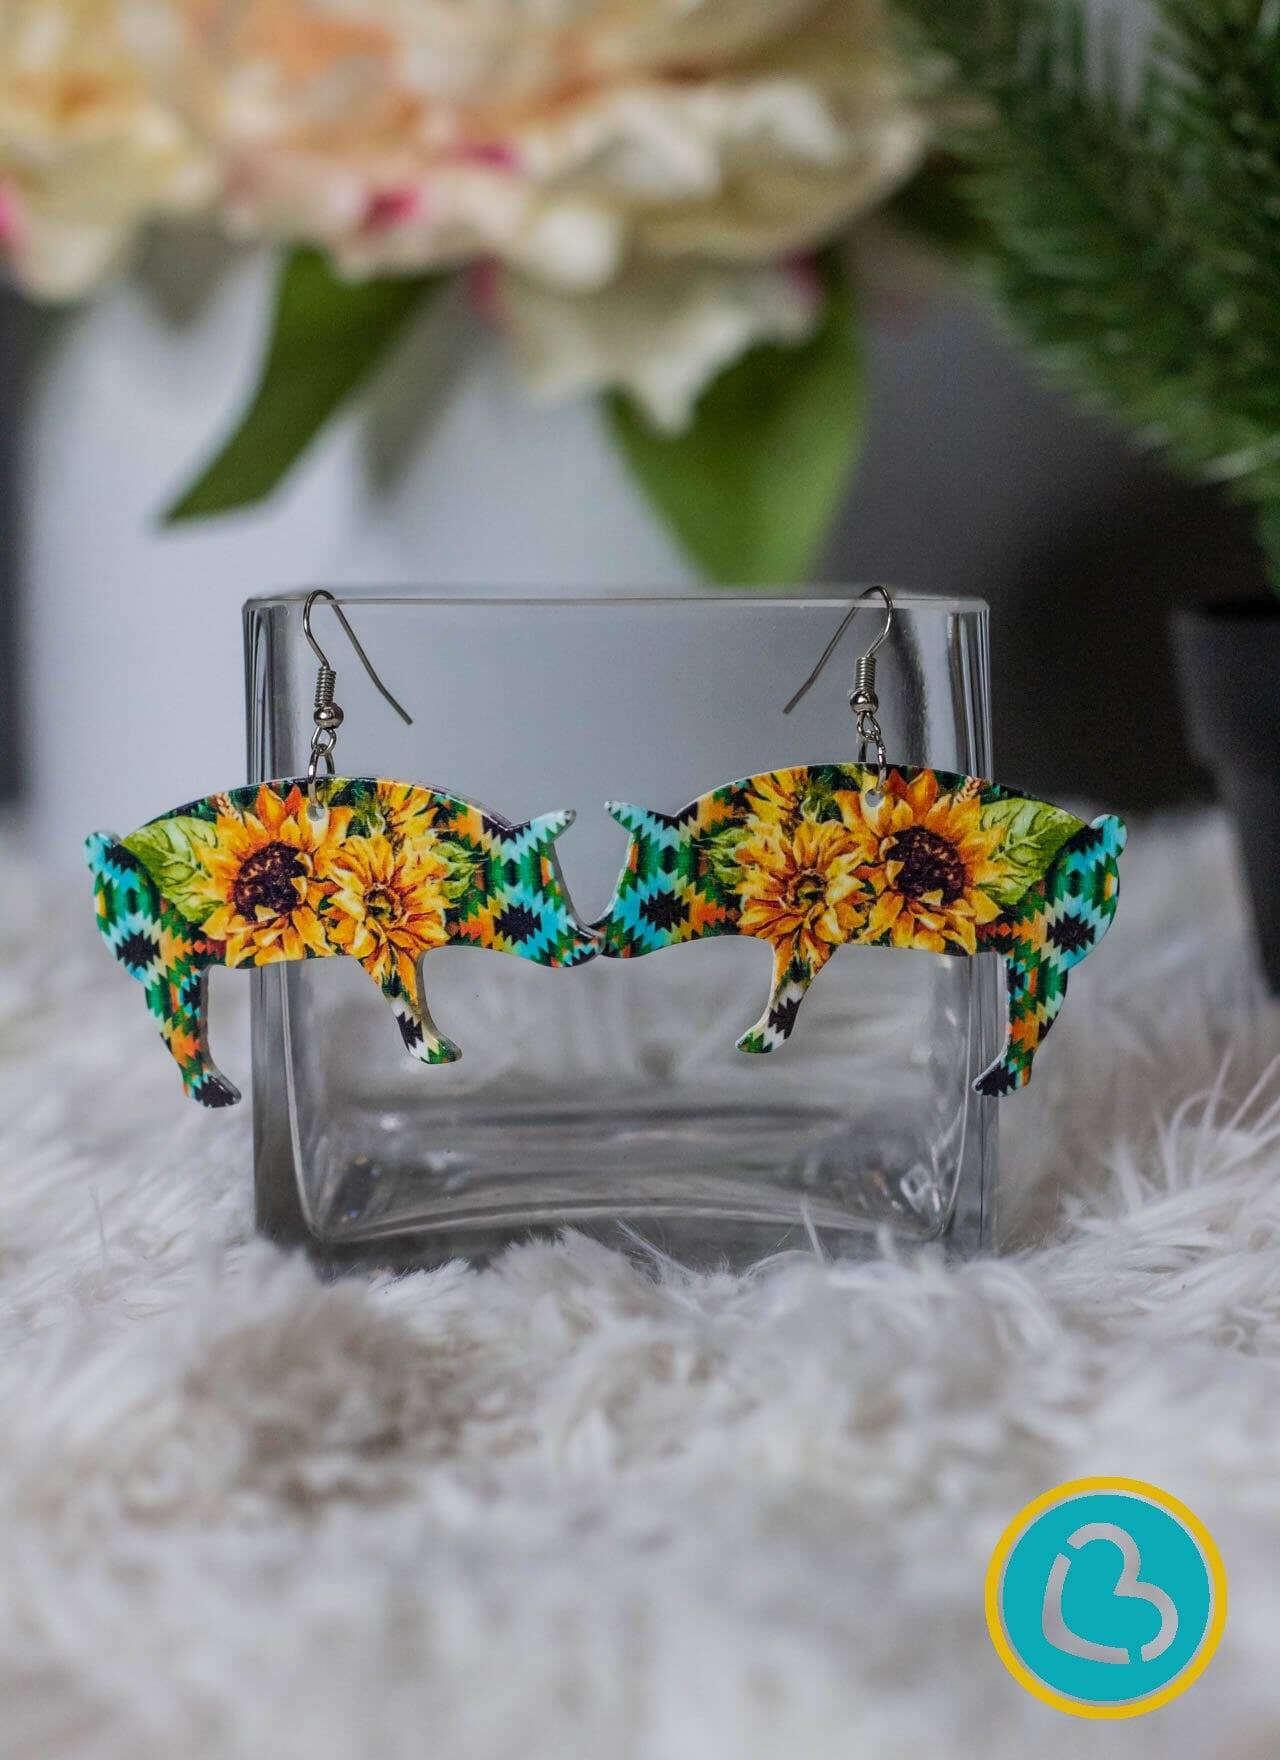 Maybelle Aztec Sunflower Pig Earrings Jewelry 18 